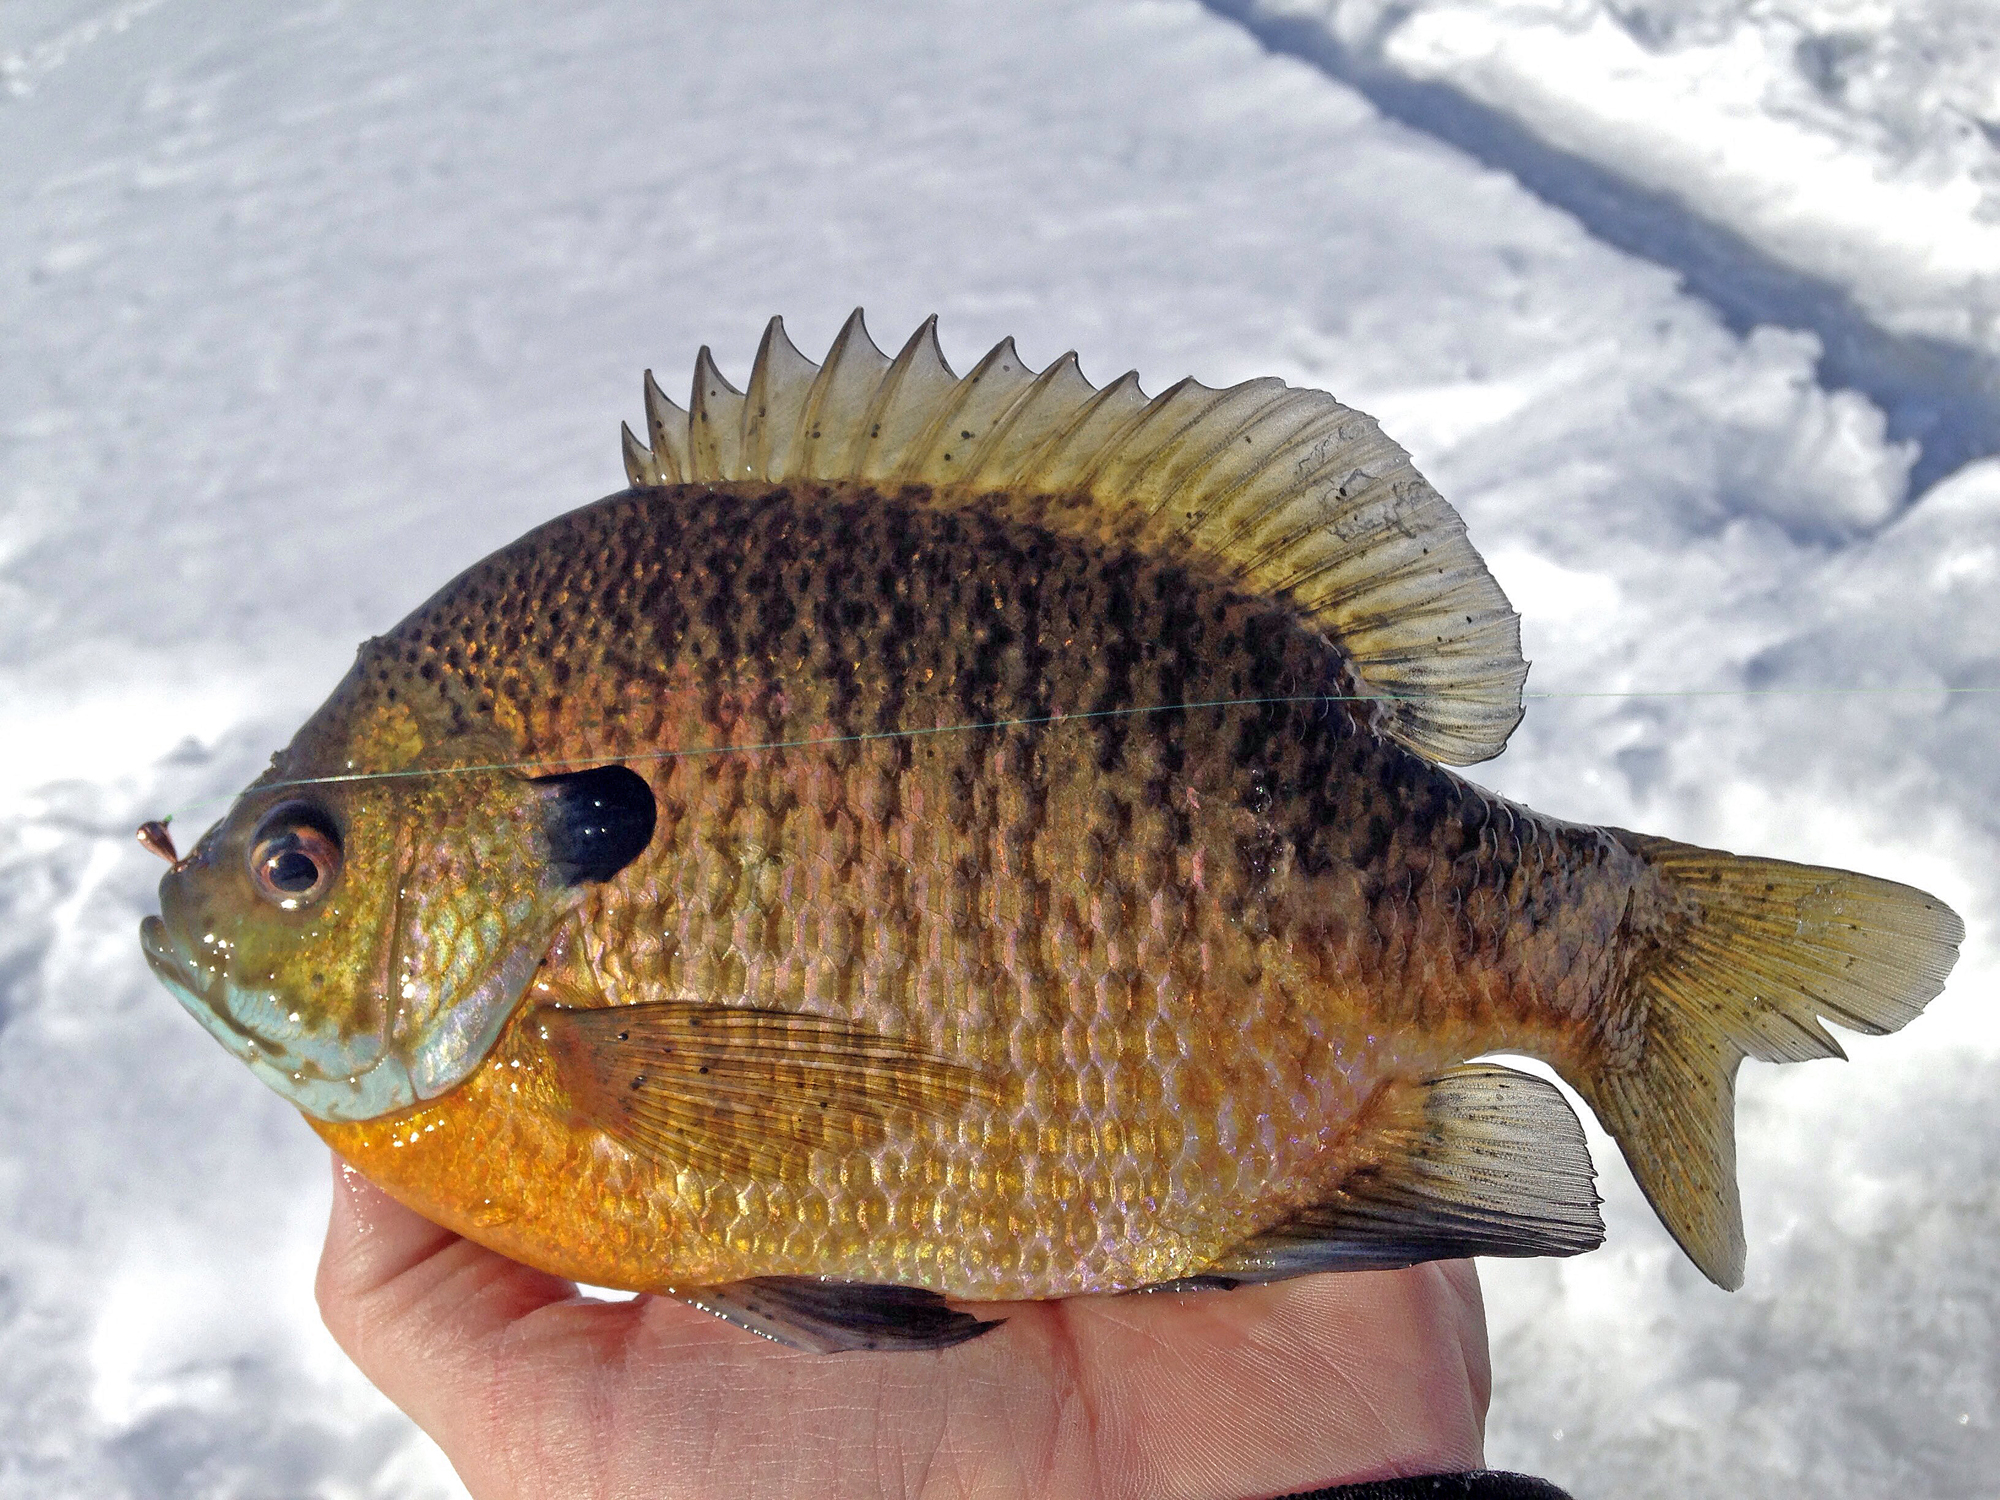 Pan fish plastics - Crappies-Sunfish - Outdoor Minnesota Fishing